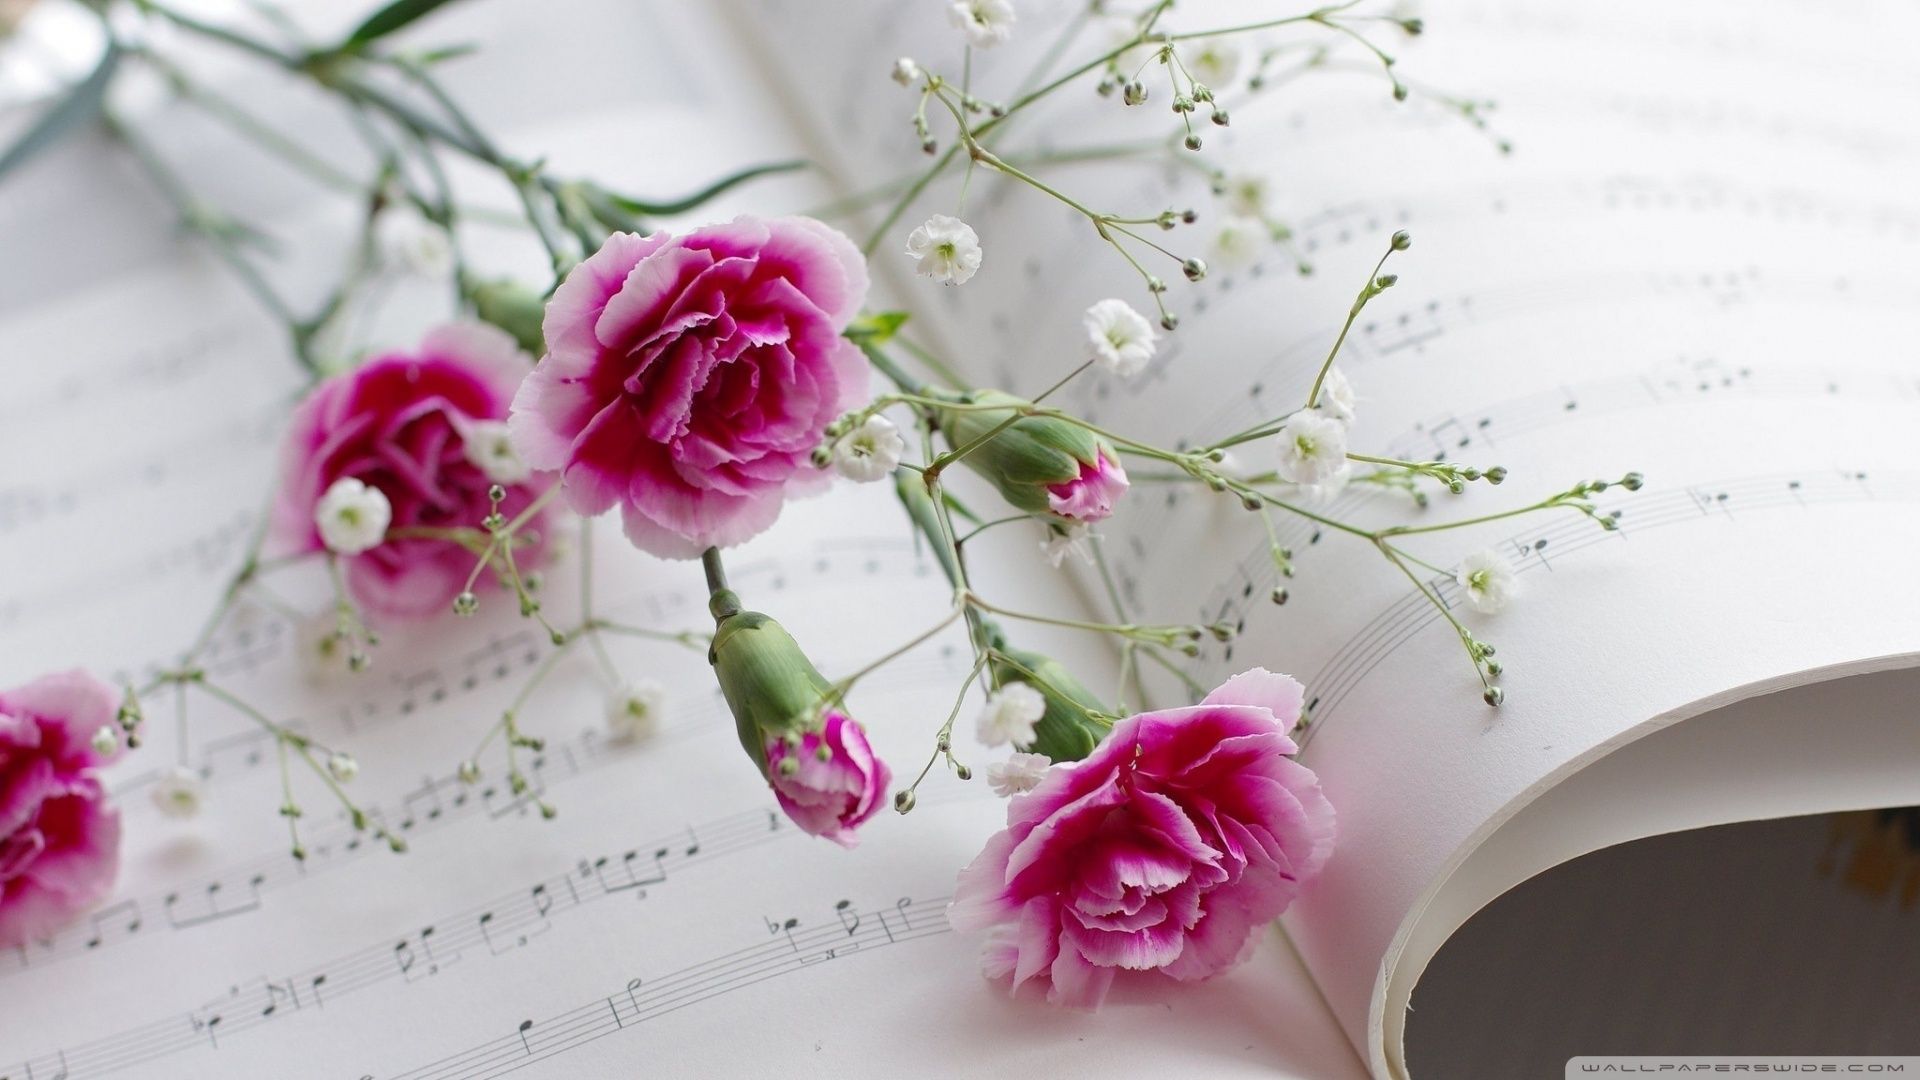 Gn1l8n4 Wallpaper Online Flowers Carnations